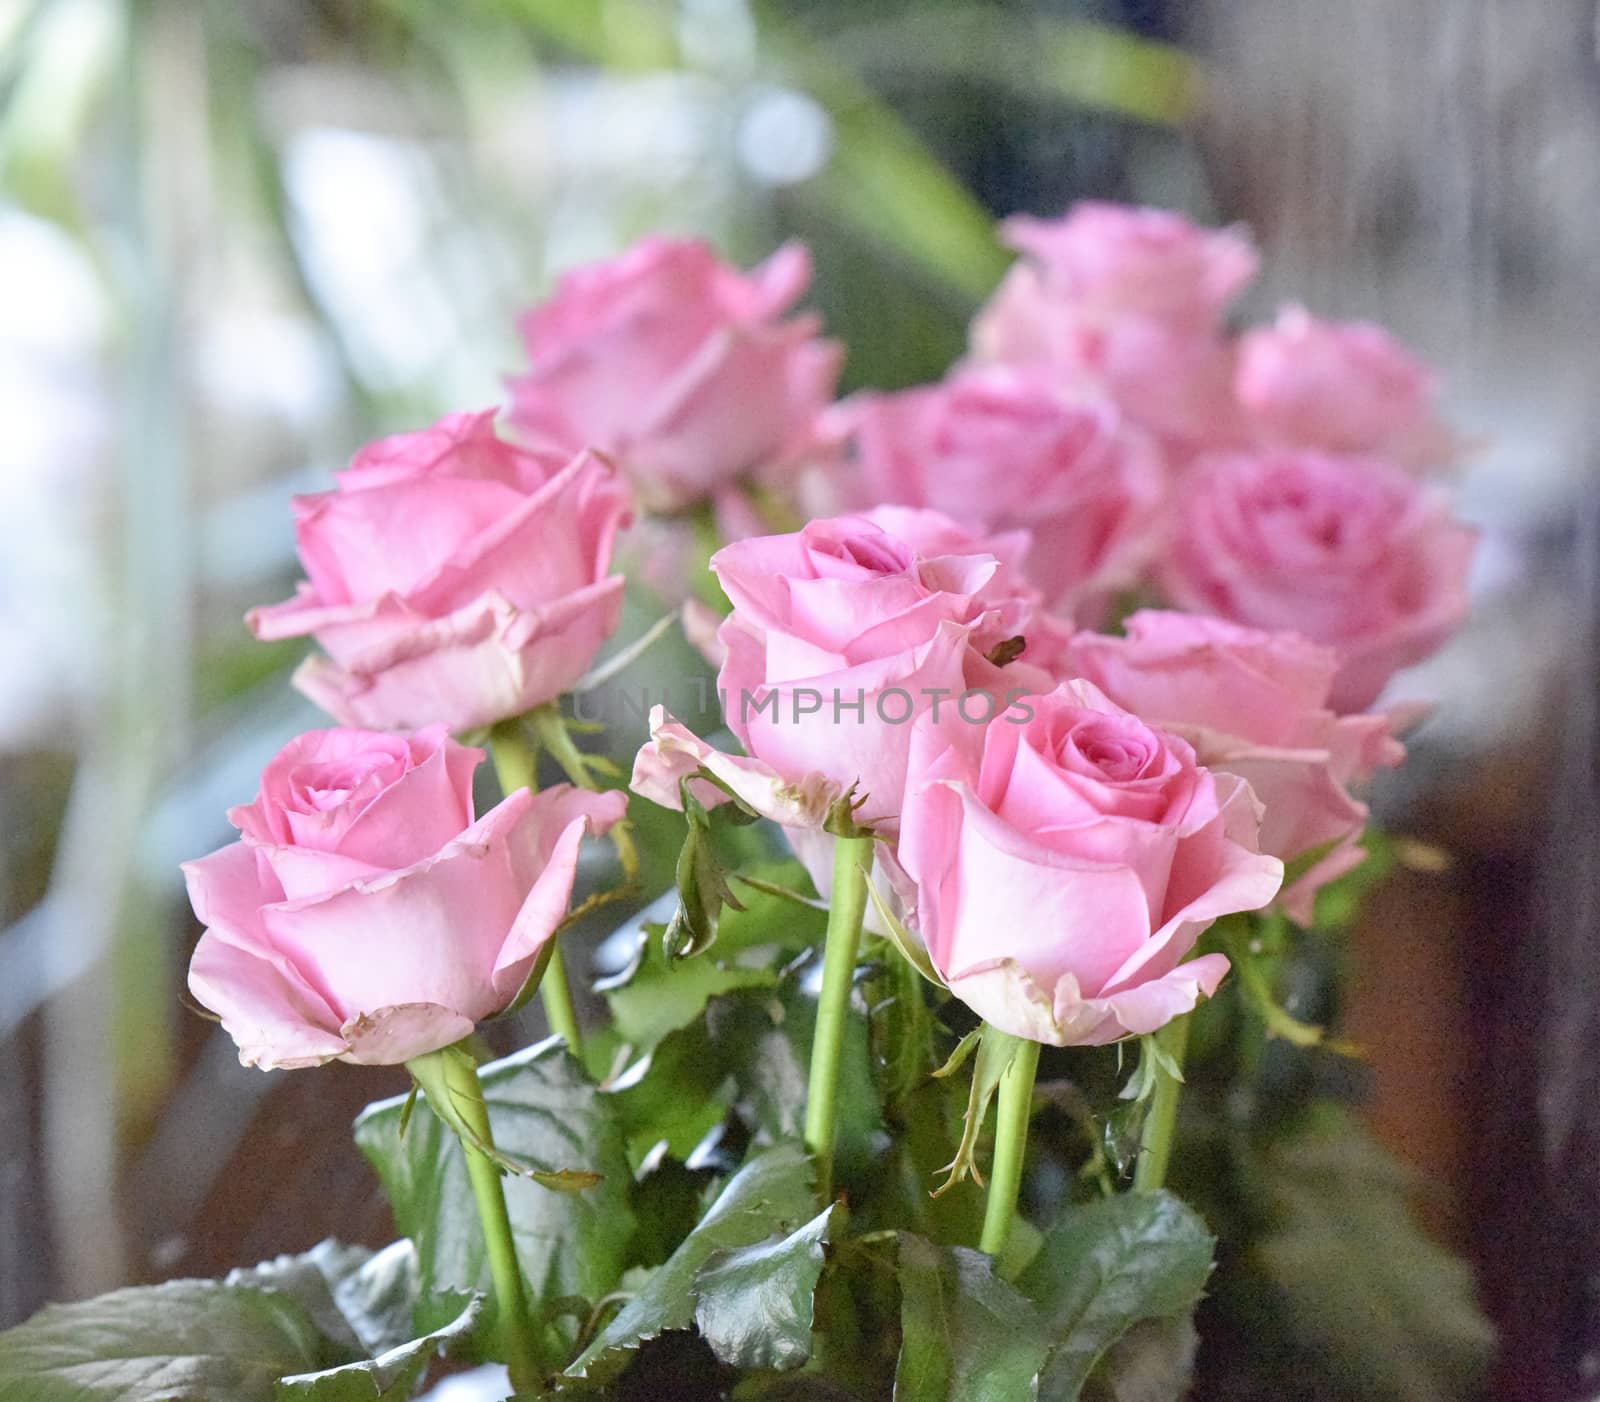 Bouquet of fading pink roses, studio shot. Selective focus. Romance concept.